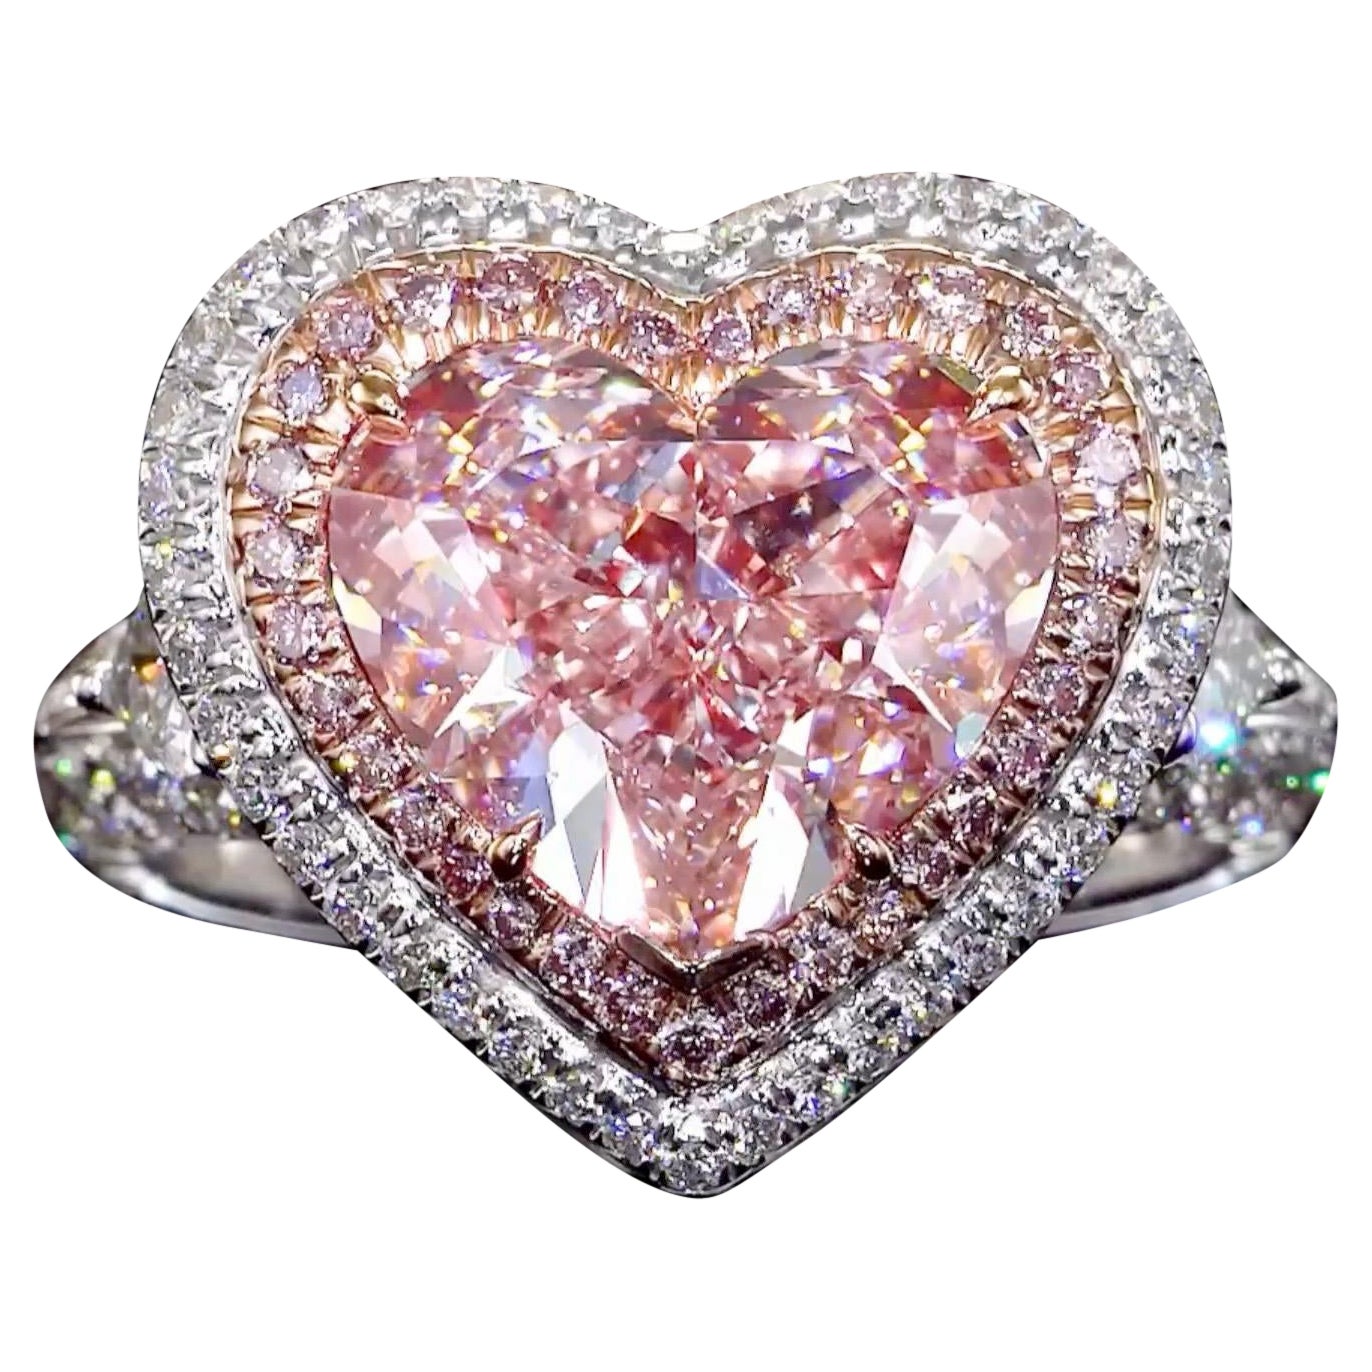 Emilio Jewelry Gia Certified 4.50 Carat Internally Flawless Pink Diamond Ring